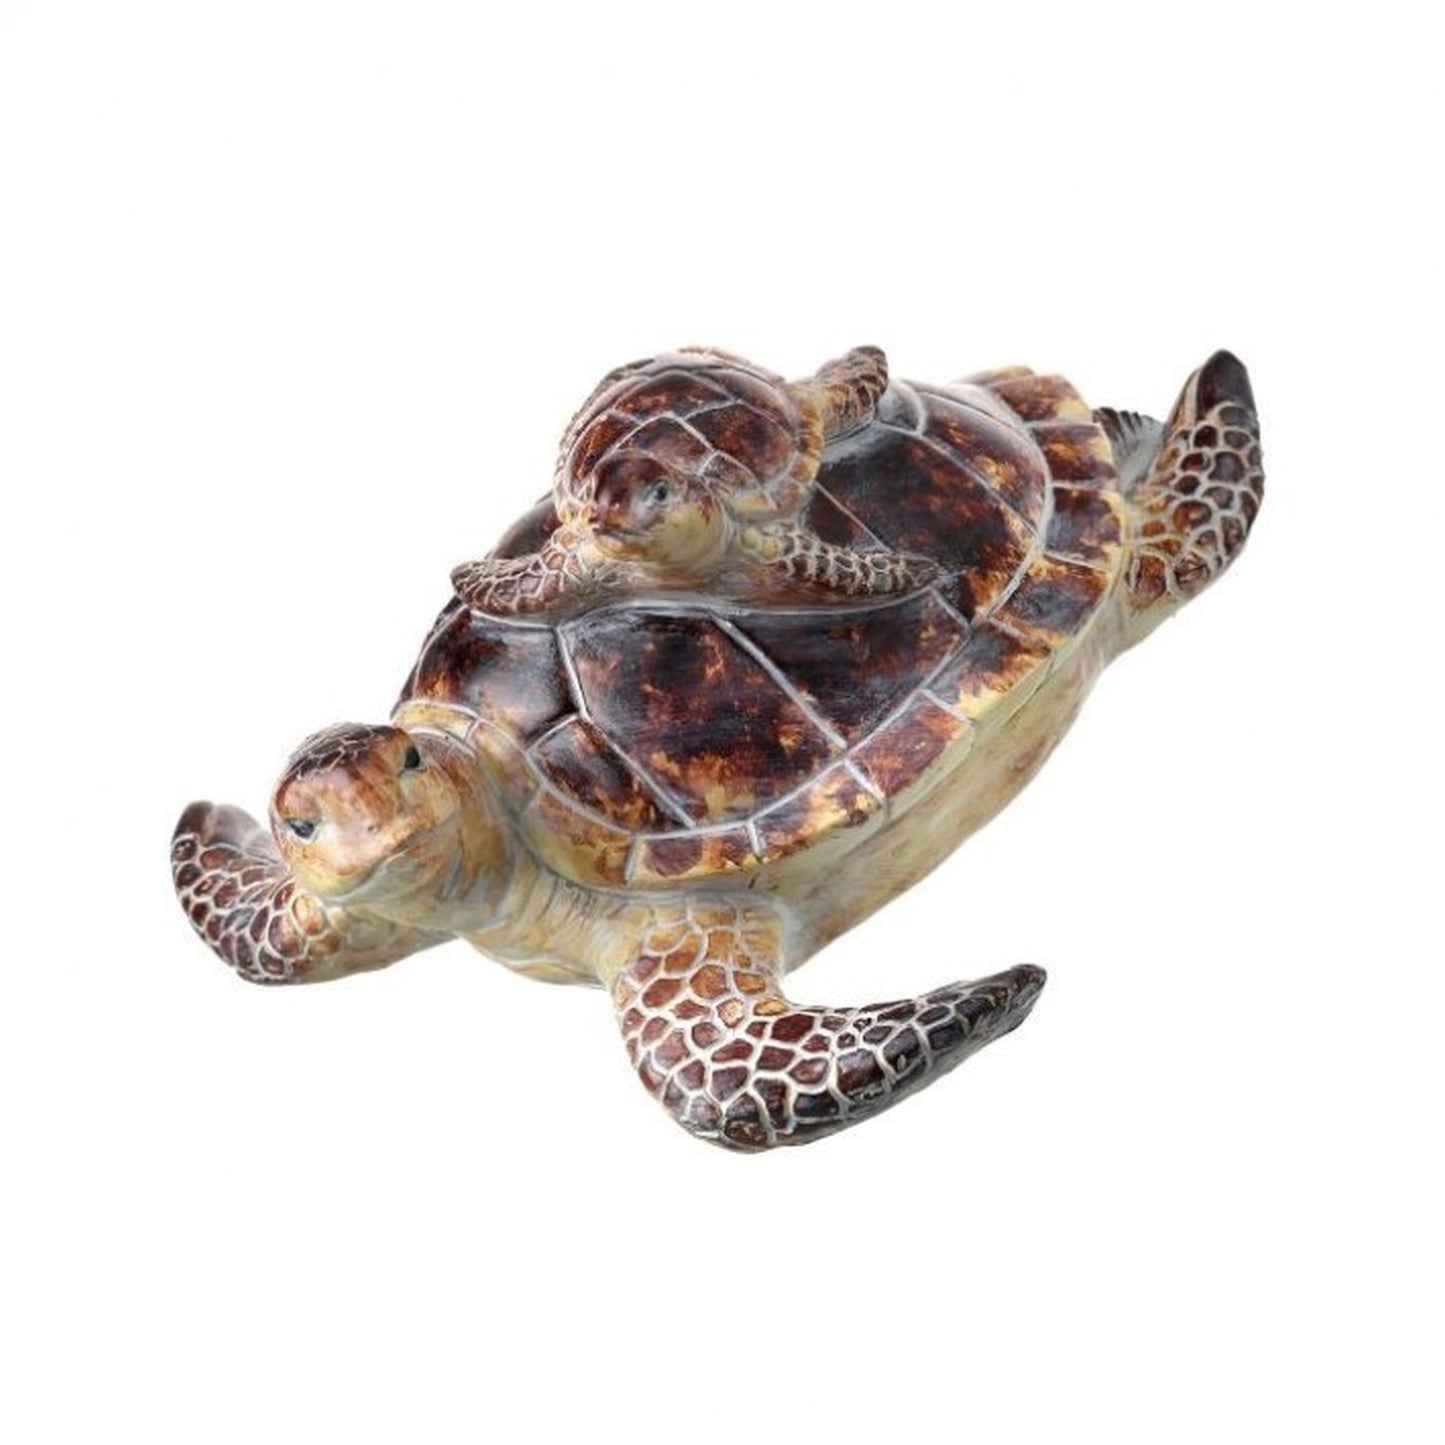 Regency International Resin Sea Turtle with Baby 8.5" Tabletop Décor